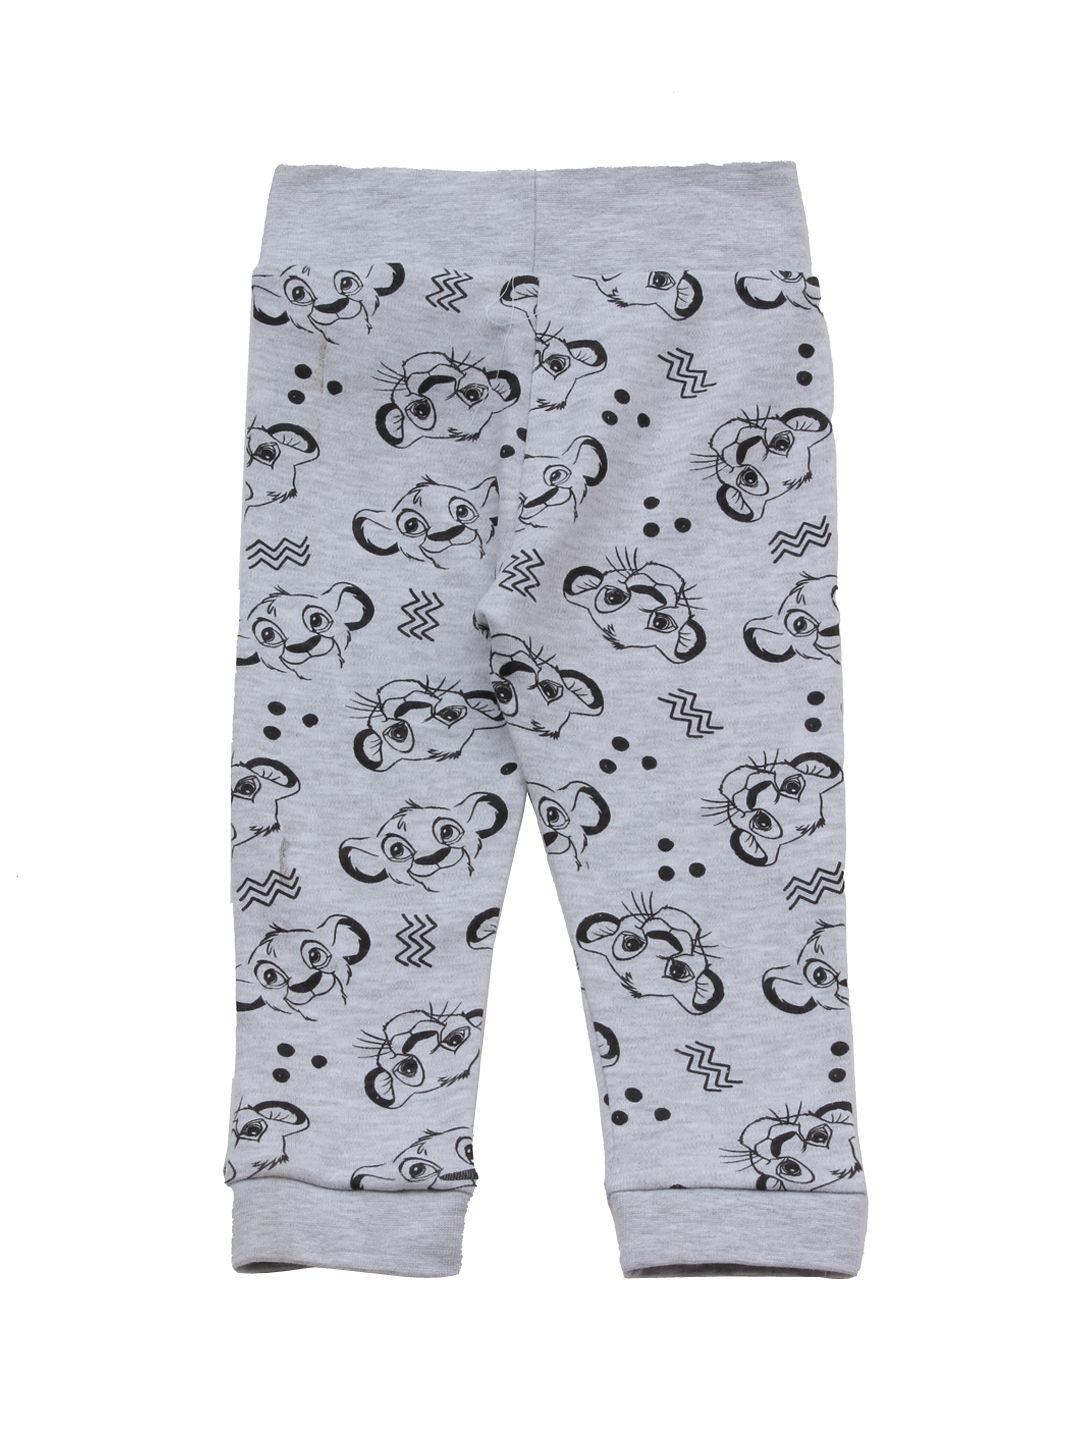 lil-lollipop-unisex-kids-grey-printed-trousers